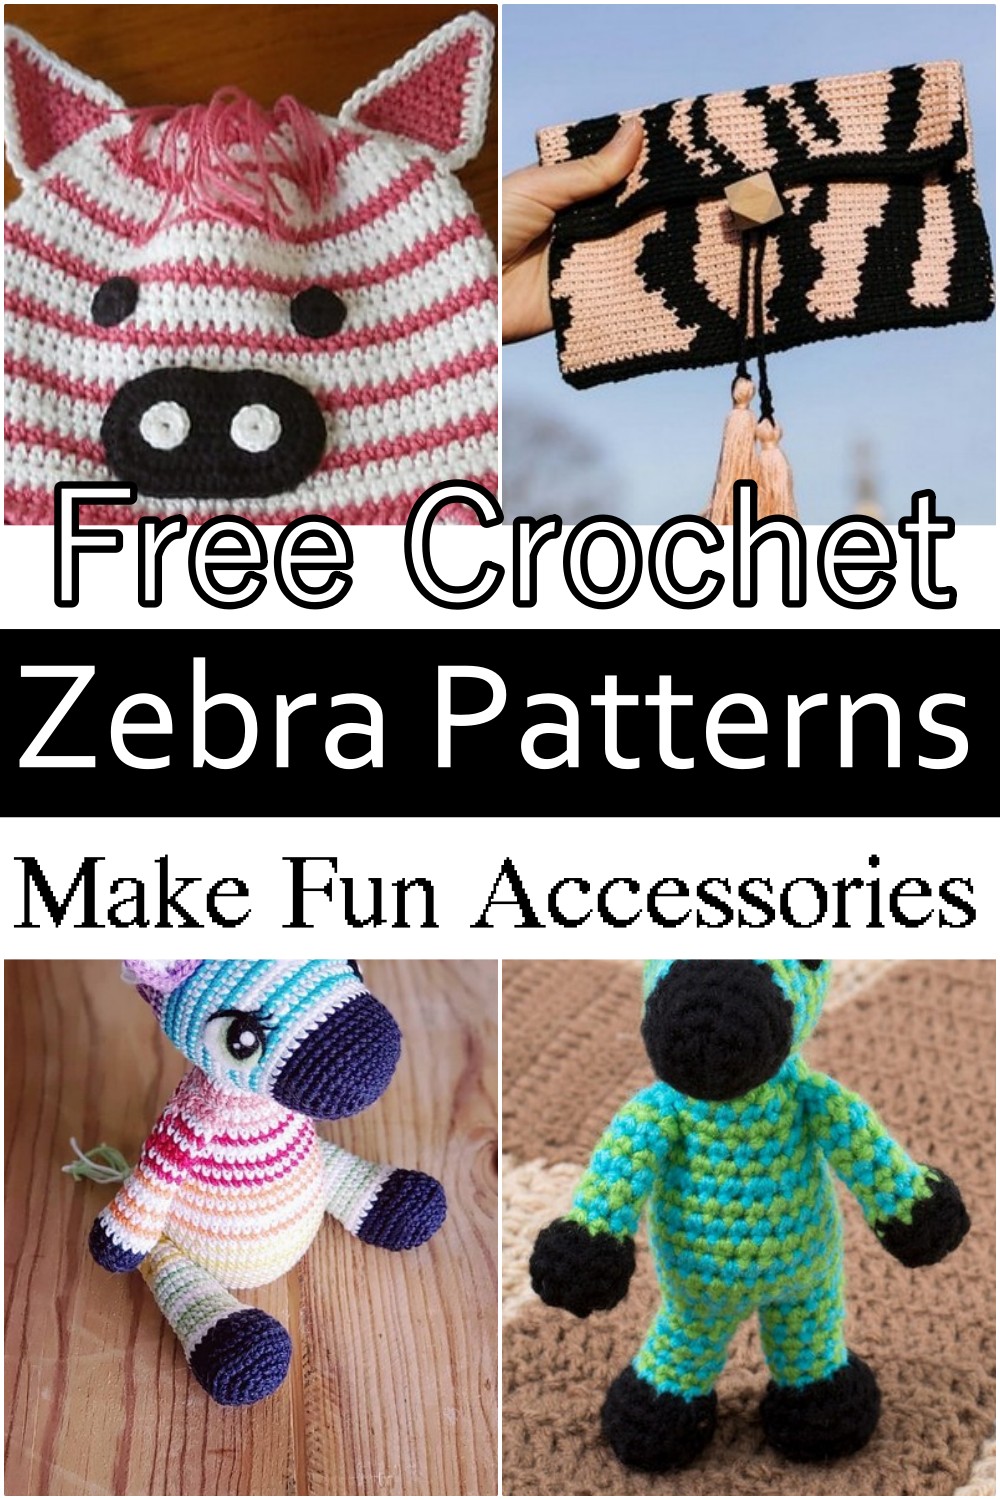 25 Free Crochet Zebra Patterns To Make Fun Accessories